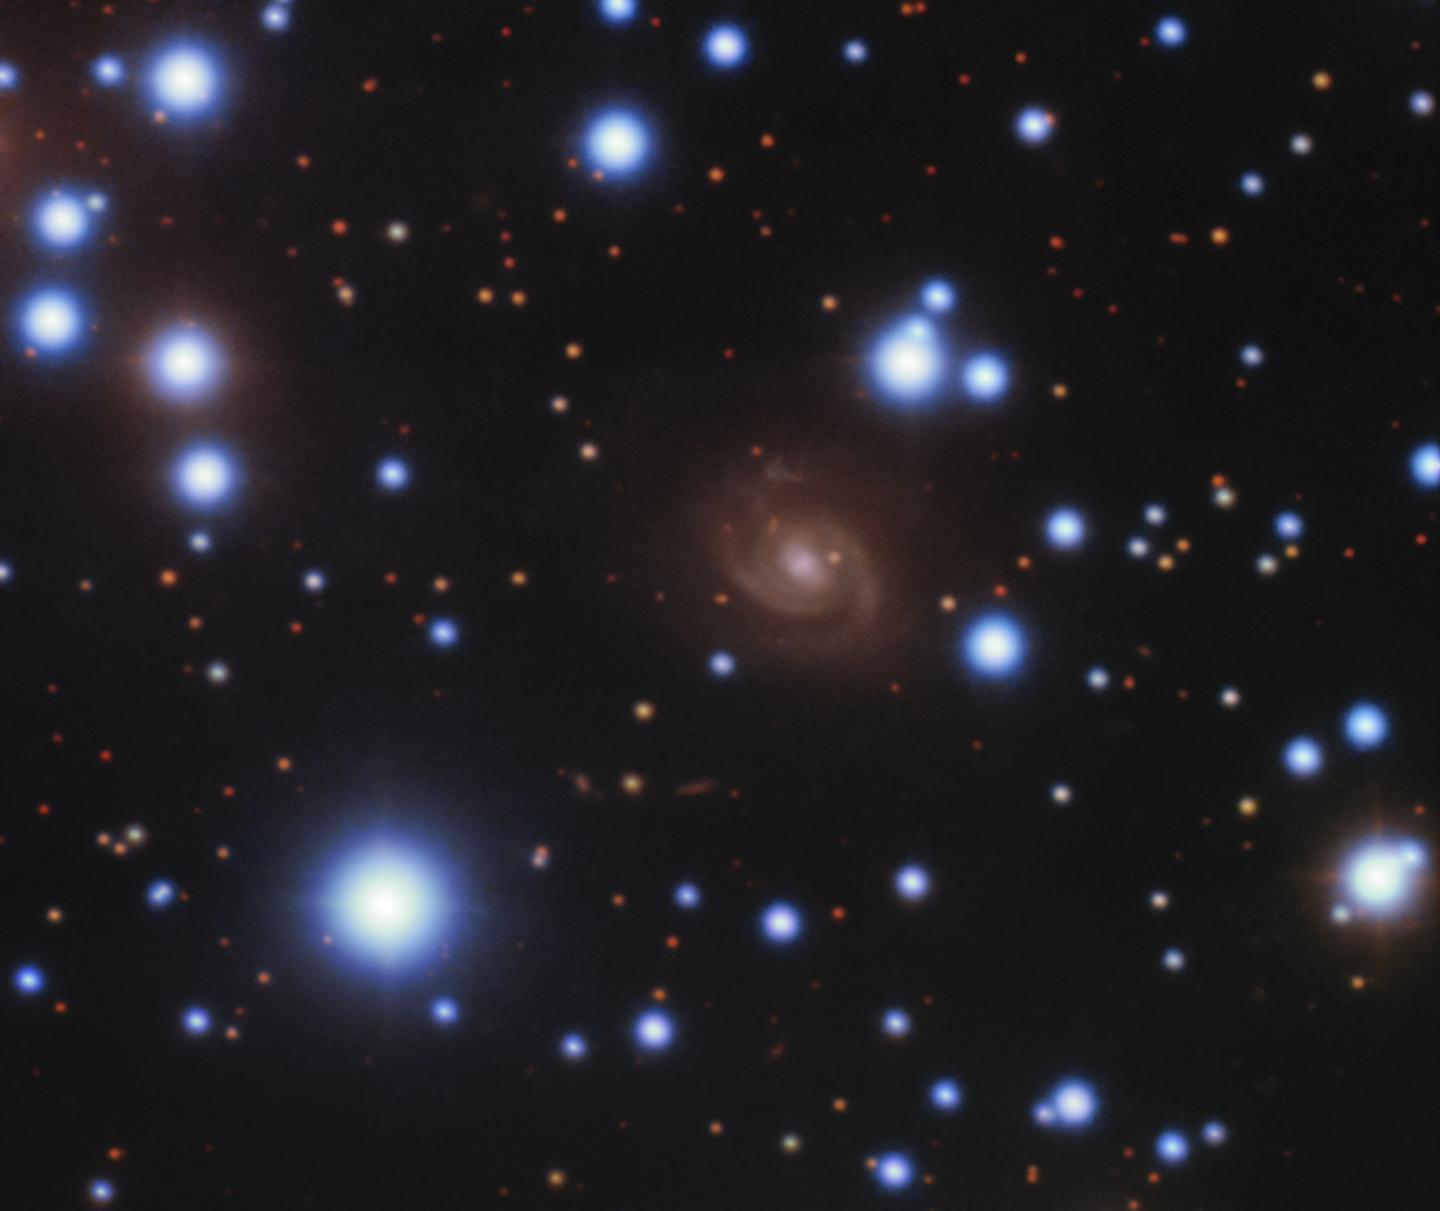 Fast Radio Burst 180916 Host Galaxy (unannotated)